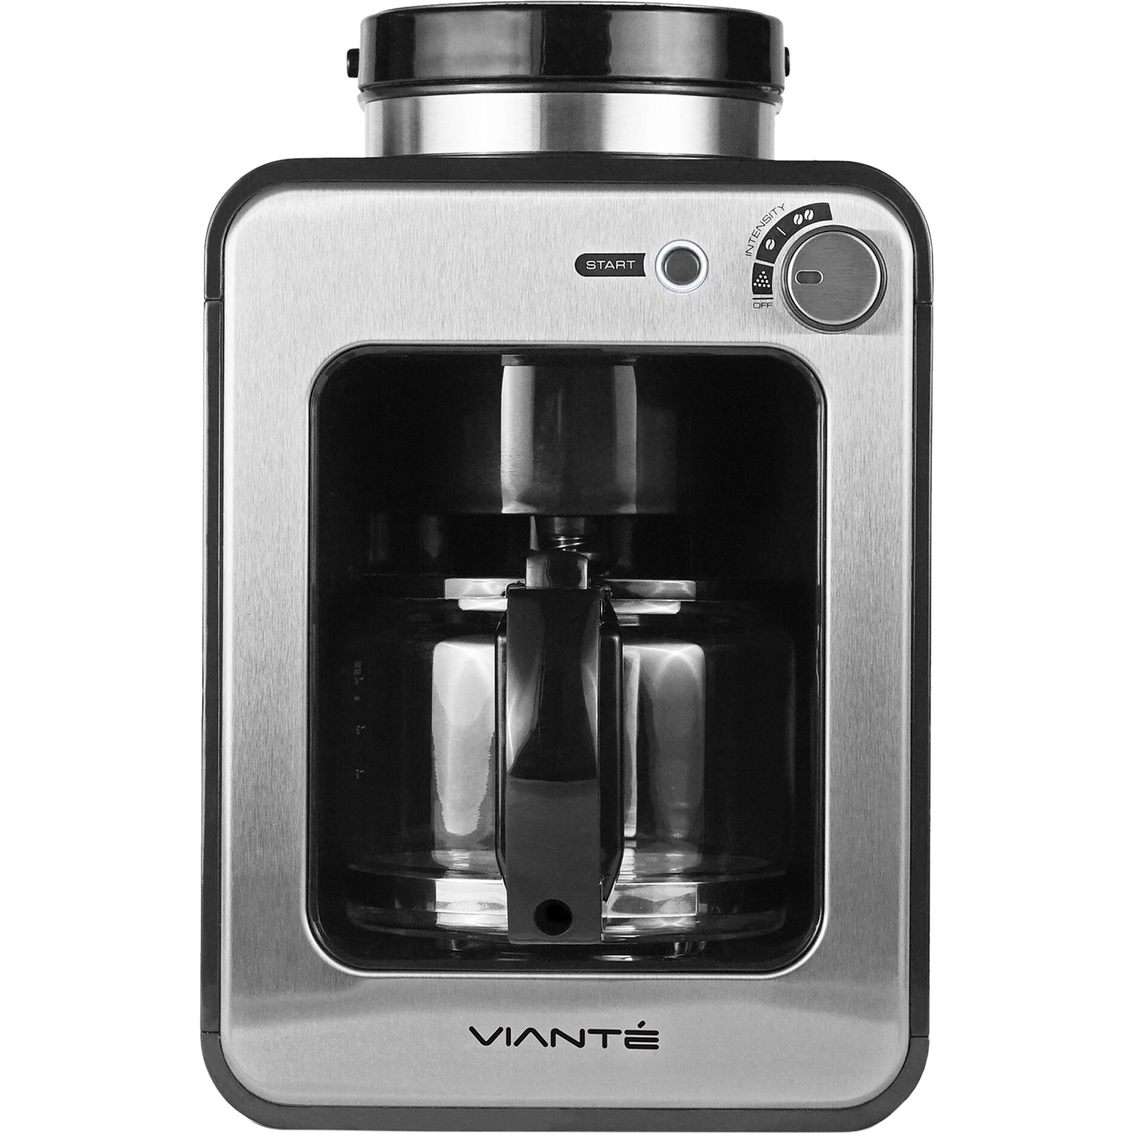 Viante Mini Grind And Brew 4 Cup Coffee Machine, Coffee, Tea & Espresso, Furniture & Appliances